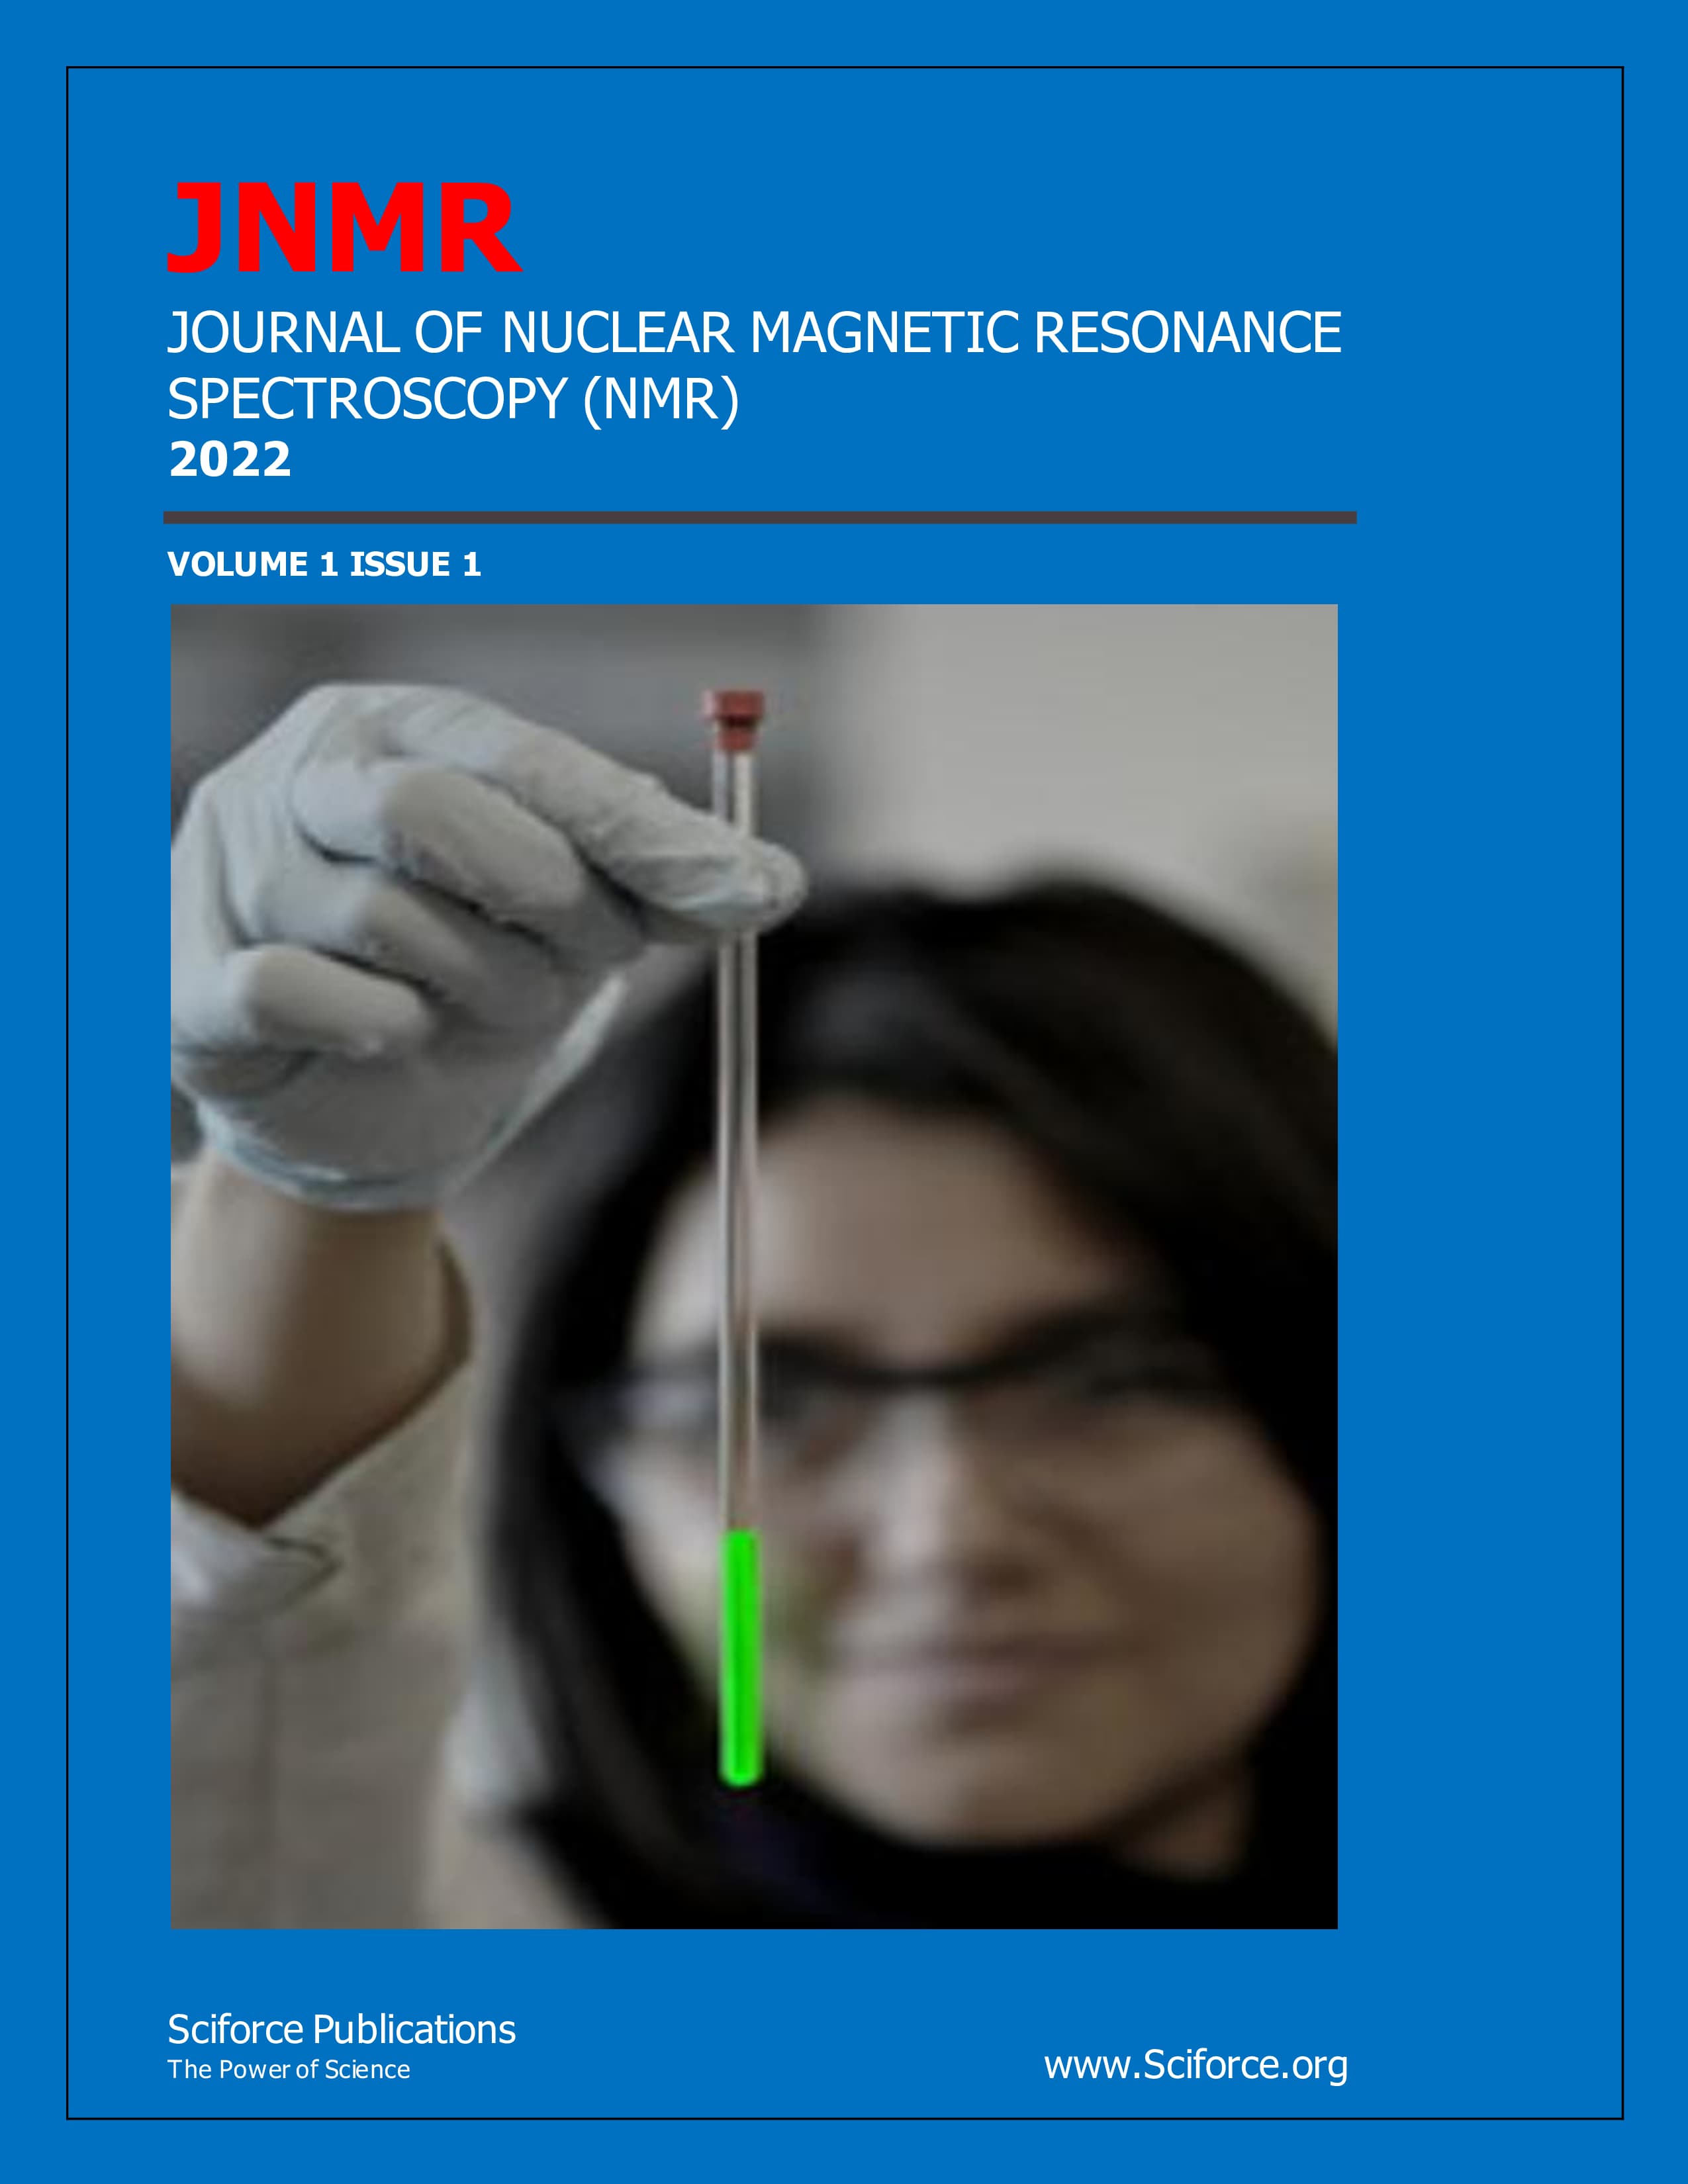 Journal of Nuclear Magnetic Resonance (NMR) Spectroscopy